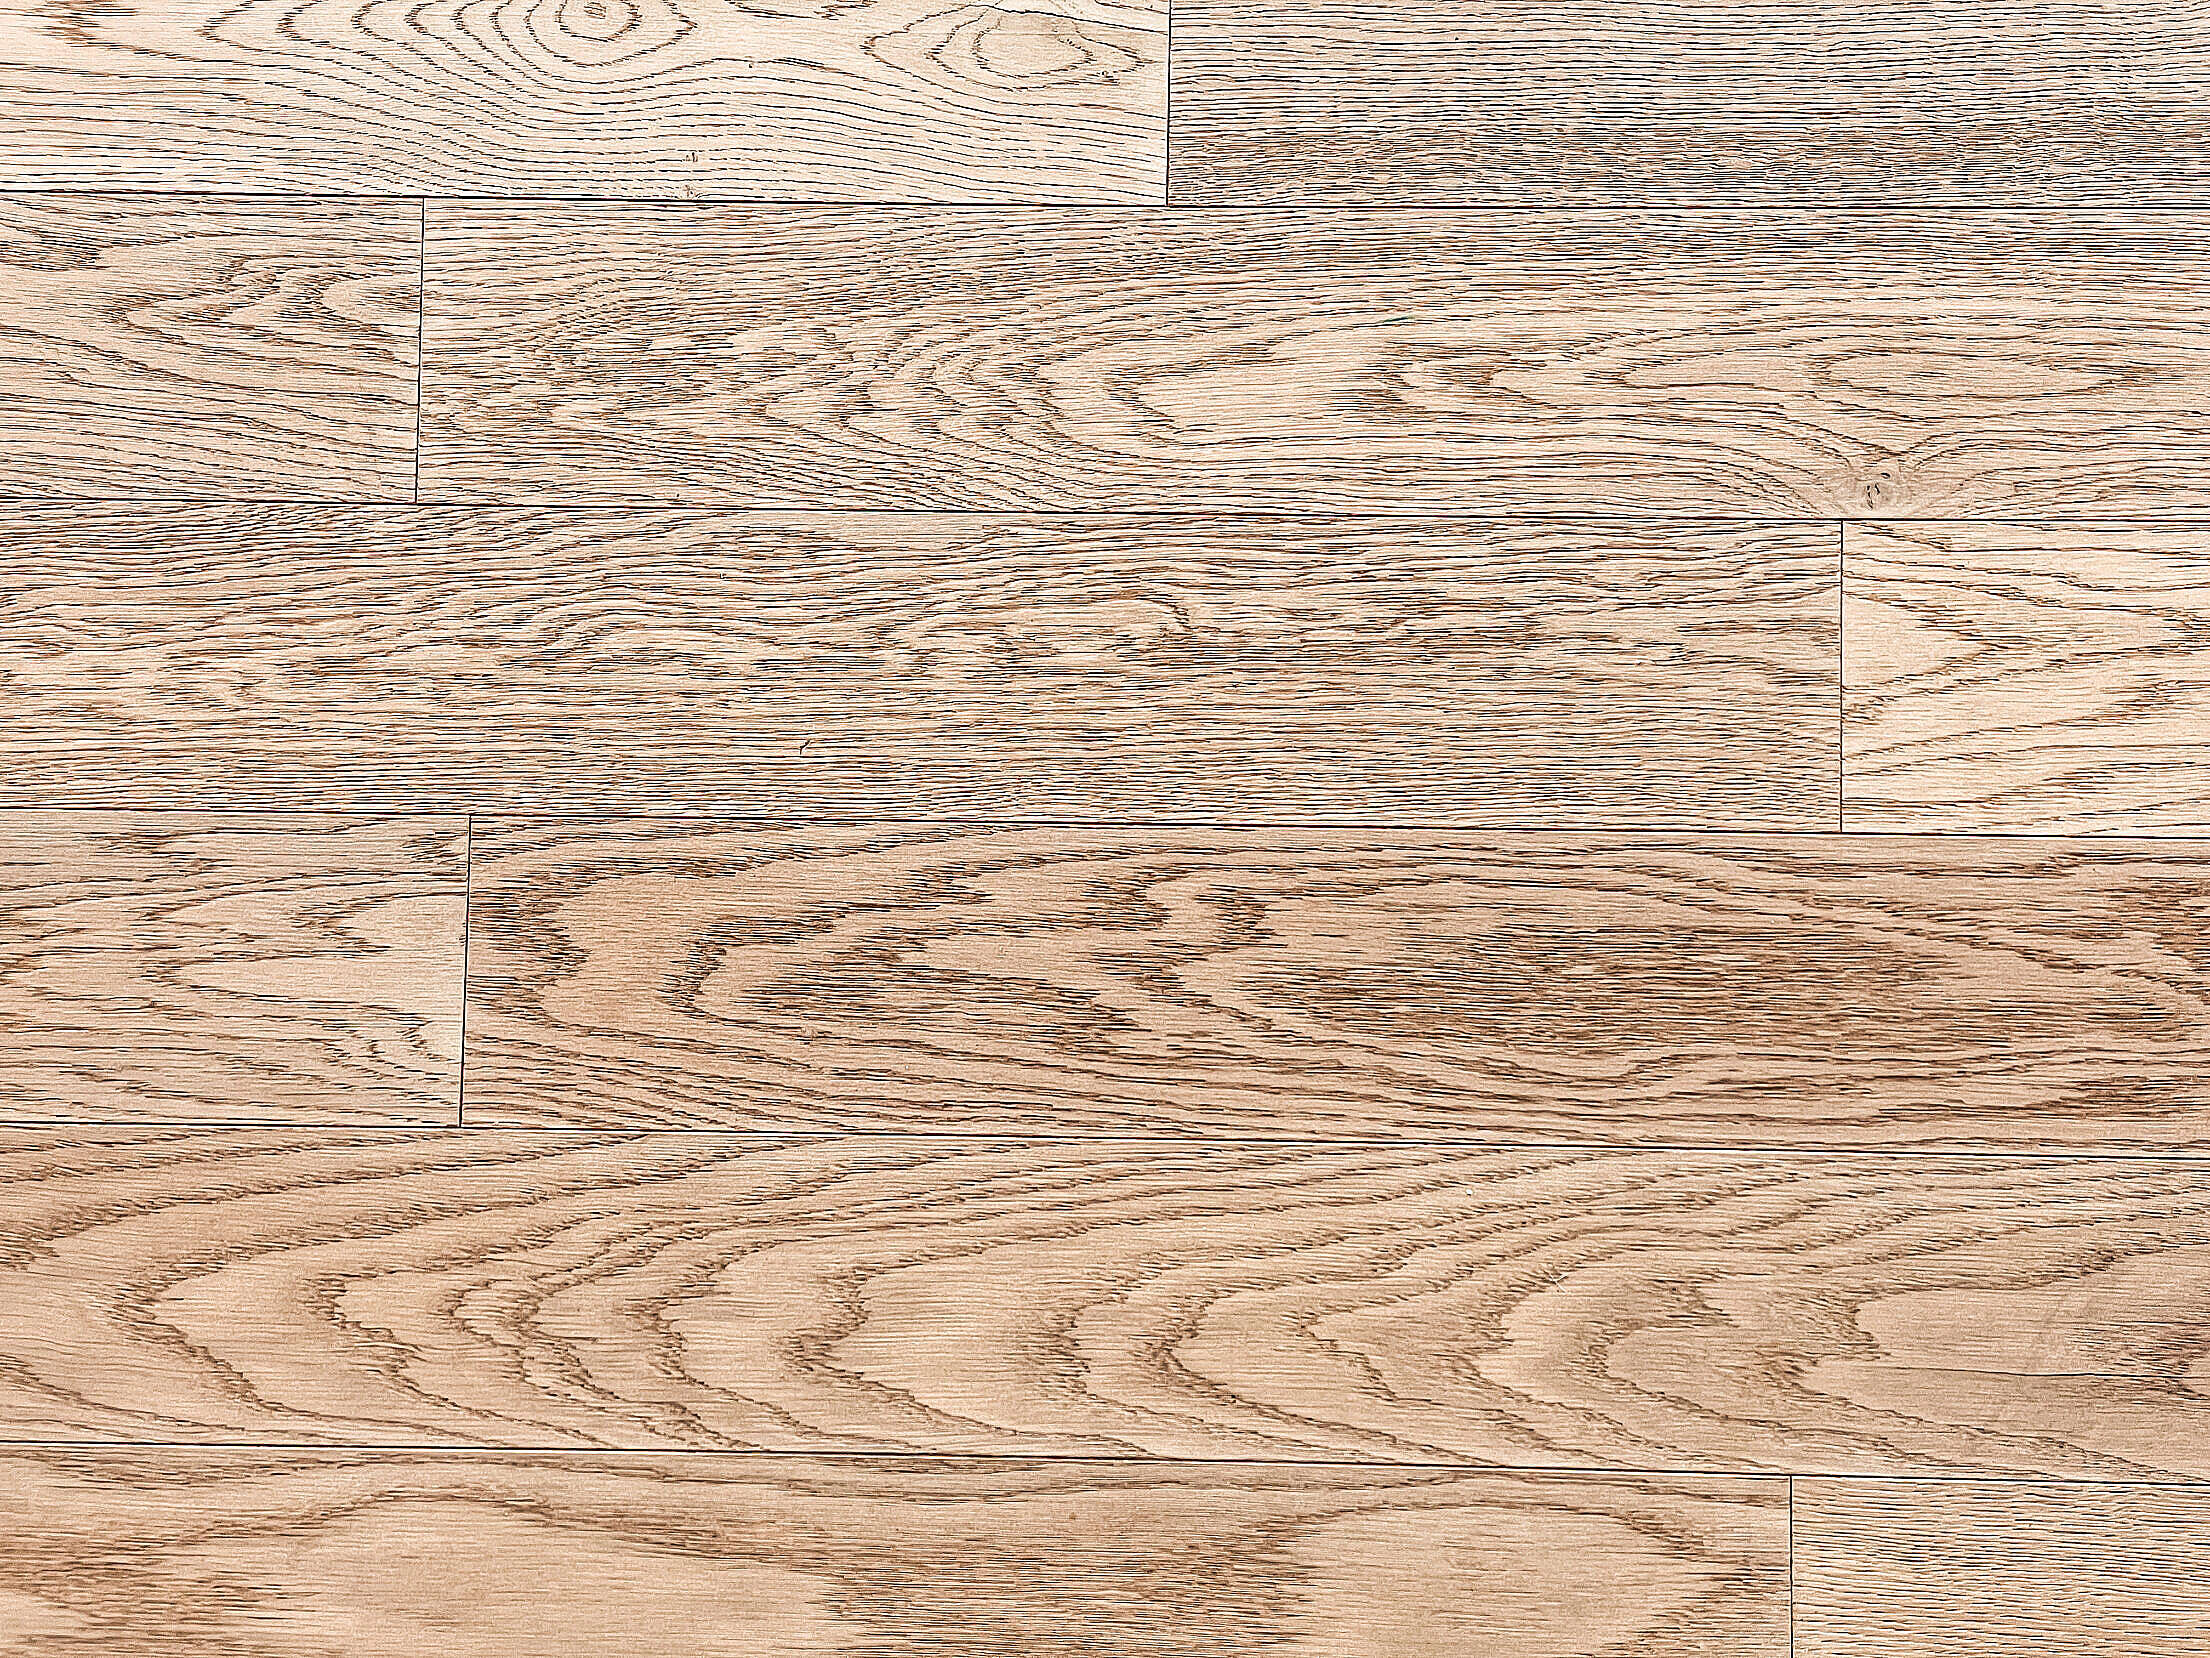 Wood Floor Texture Free Stock Photo